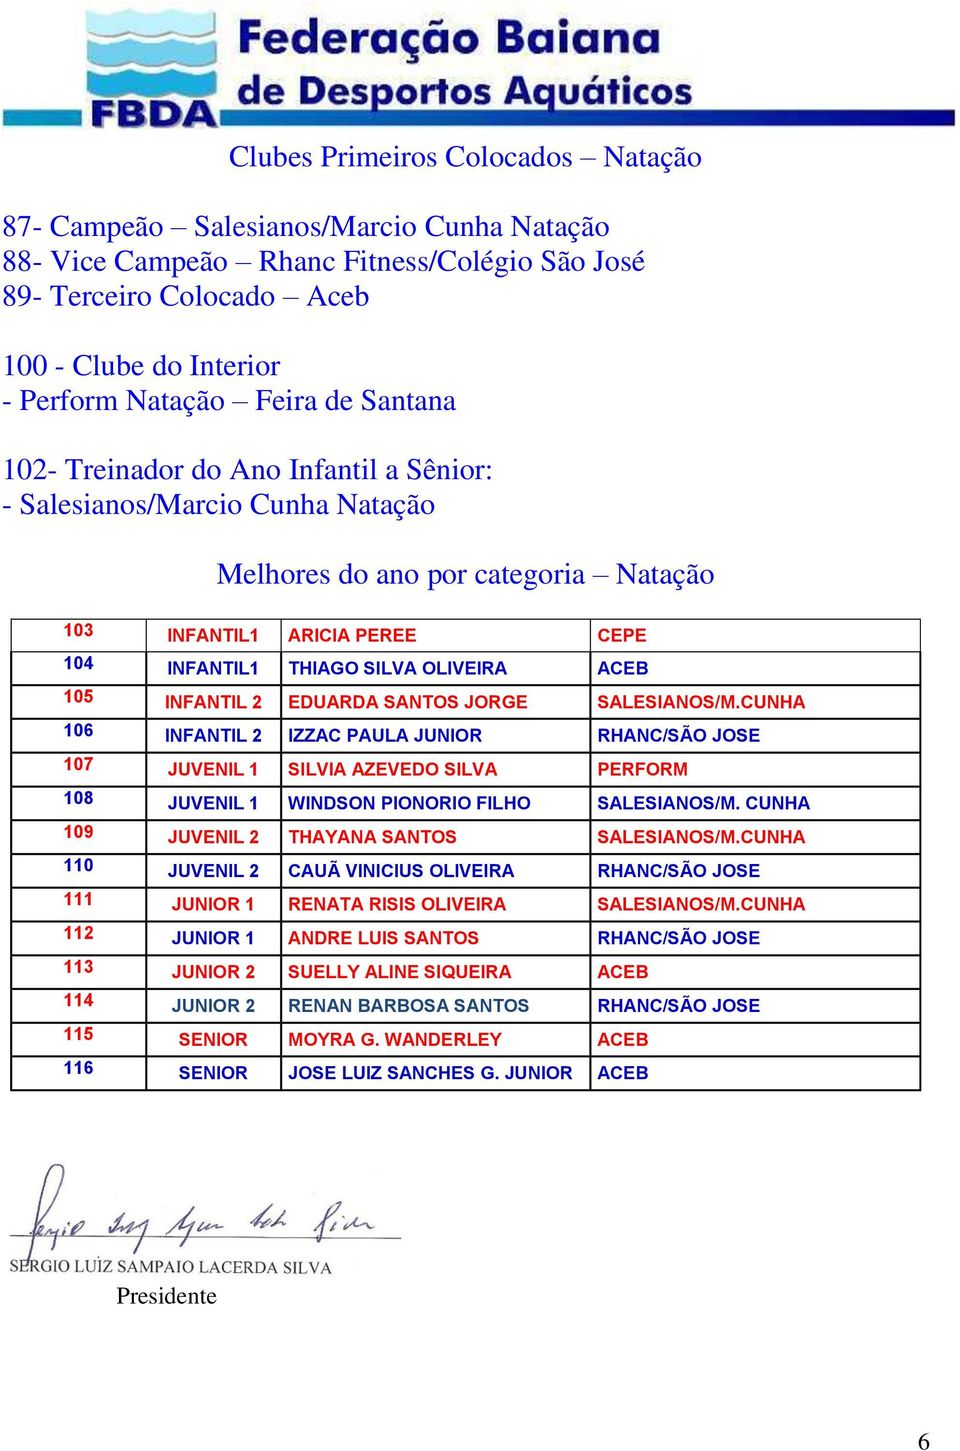 ACEB 105 INFANTIL 2 EDUARDA SANTOS JORGE SALESIANOS/M.